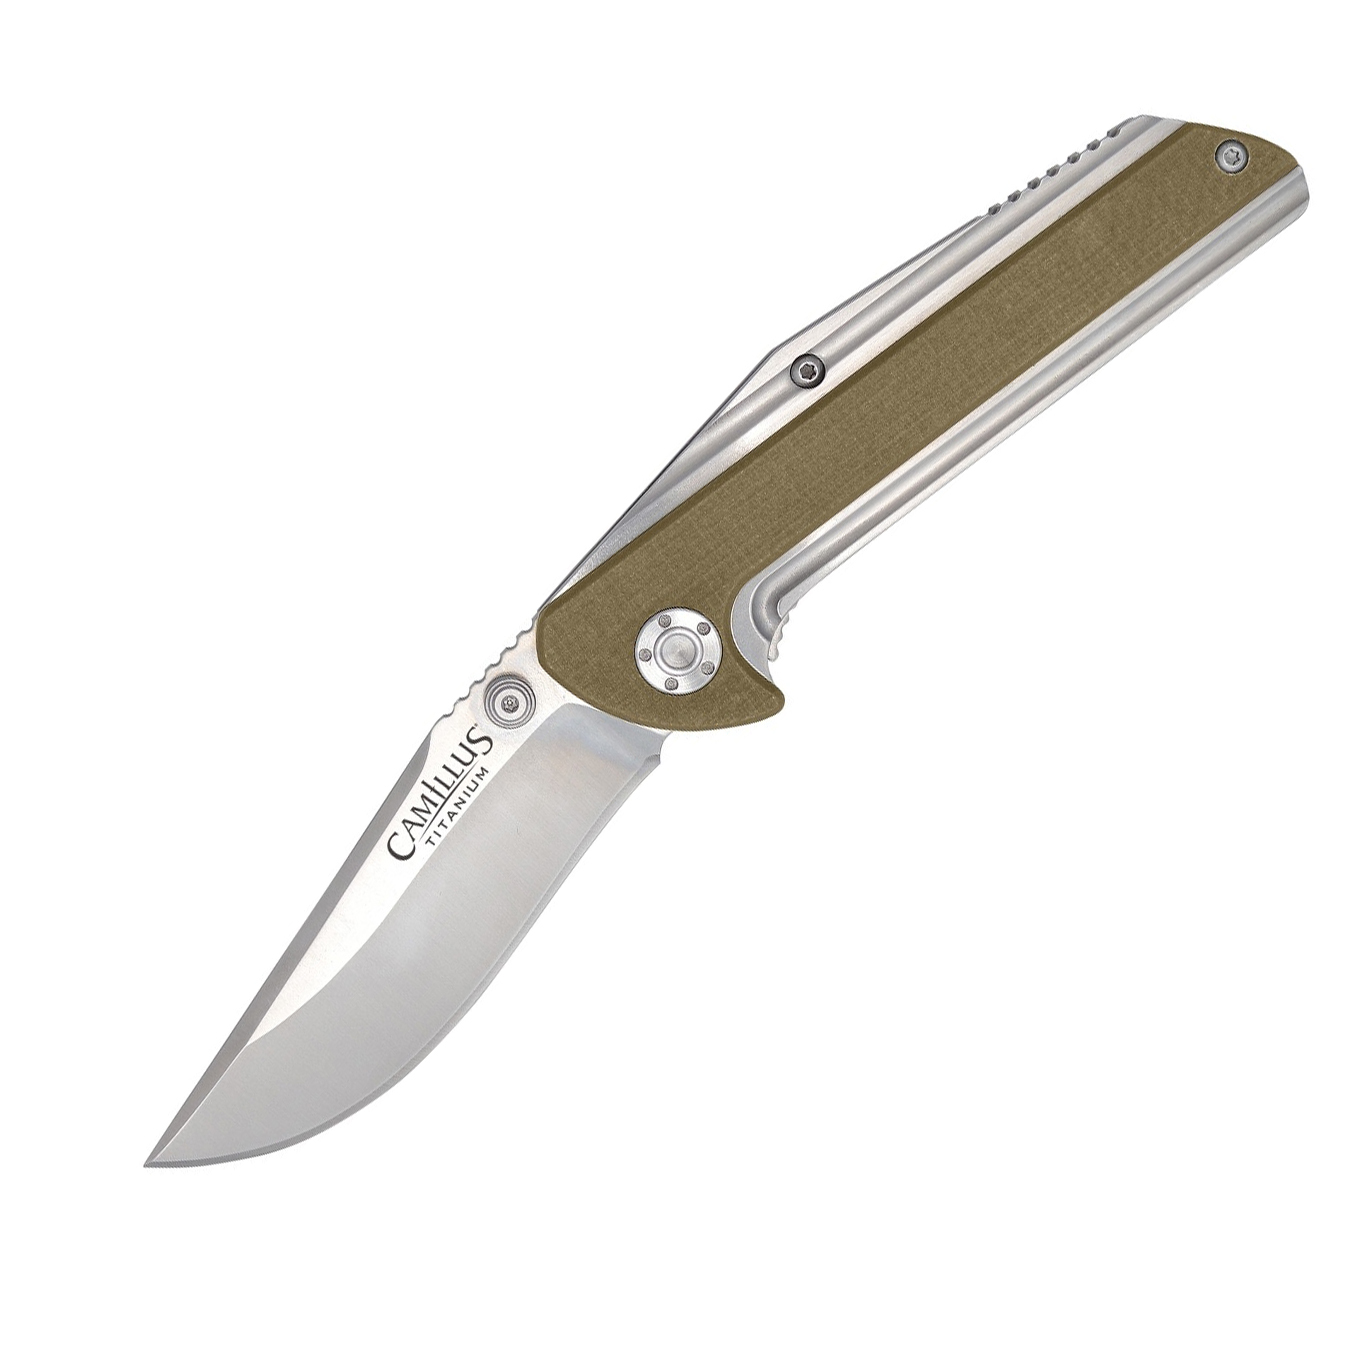 Нож складной Camillus Sevens, Titanium Bonded® Aus-8 Steel, Stainless Steel with Desert Tan G-10 Accented Handle 7.6 см. - фото 1